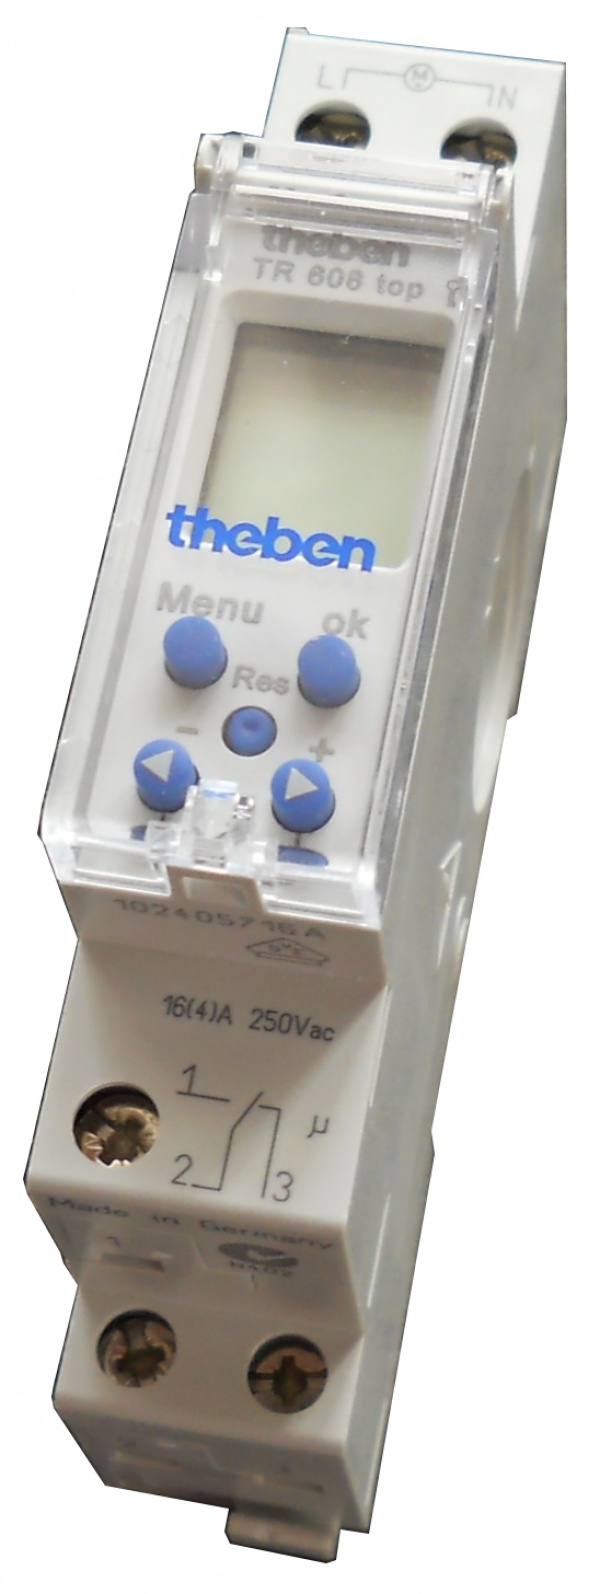 Theben TR608 top